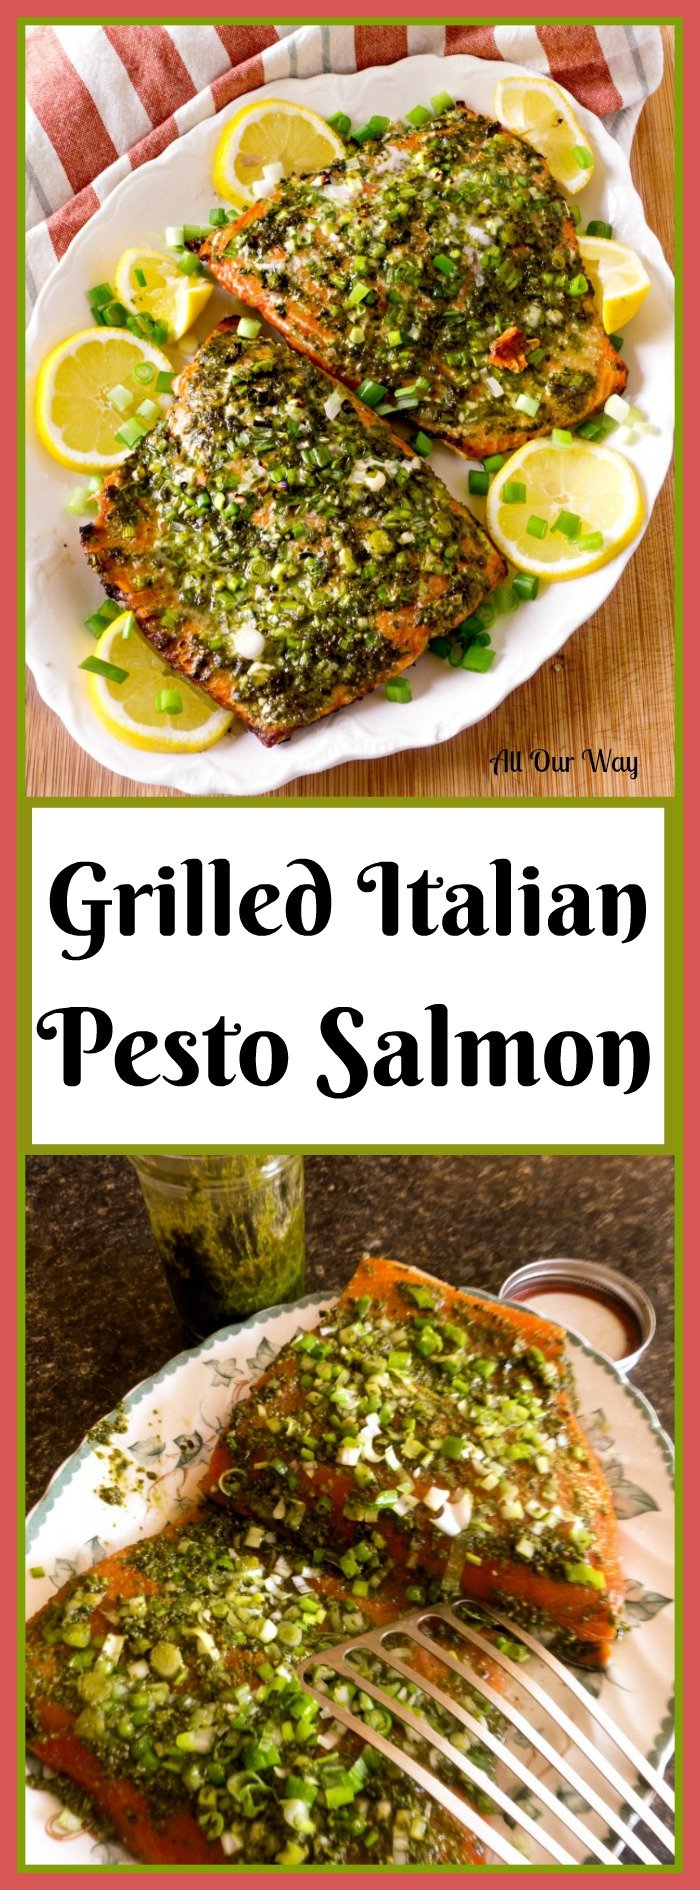 Grilled Italian Pesto Salmon a quick and delicious dish ready in 30 minutes @allourway.com